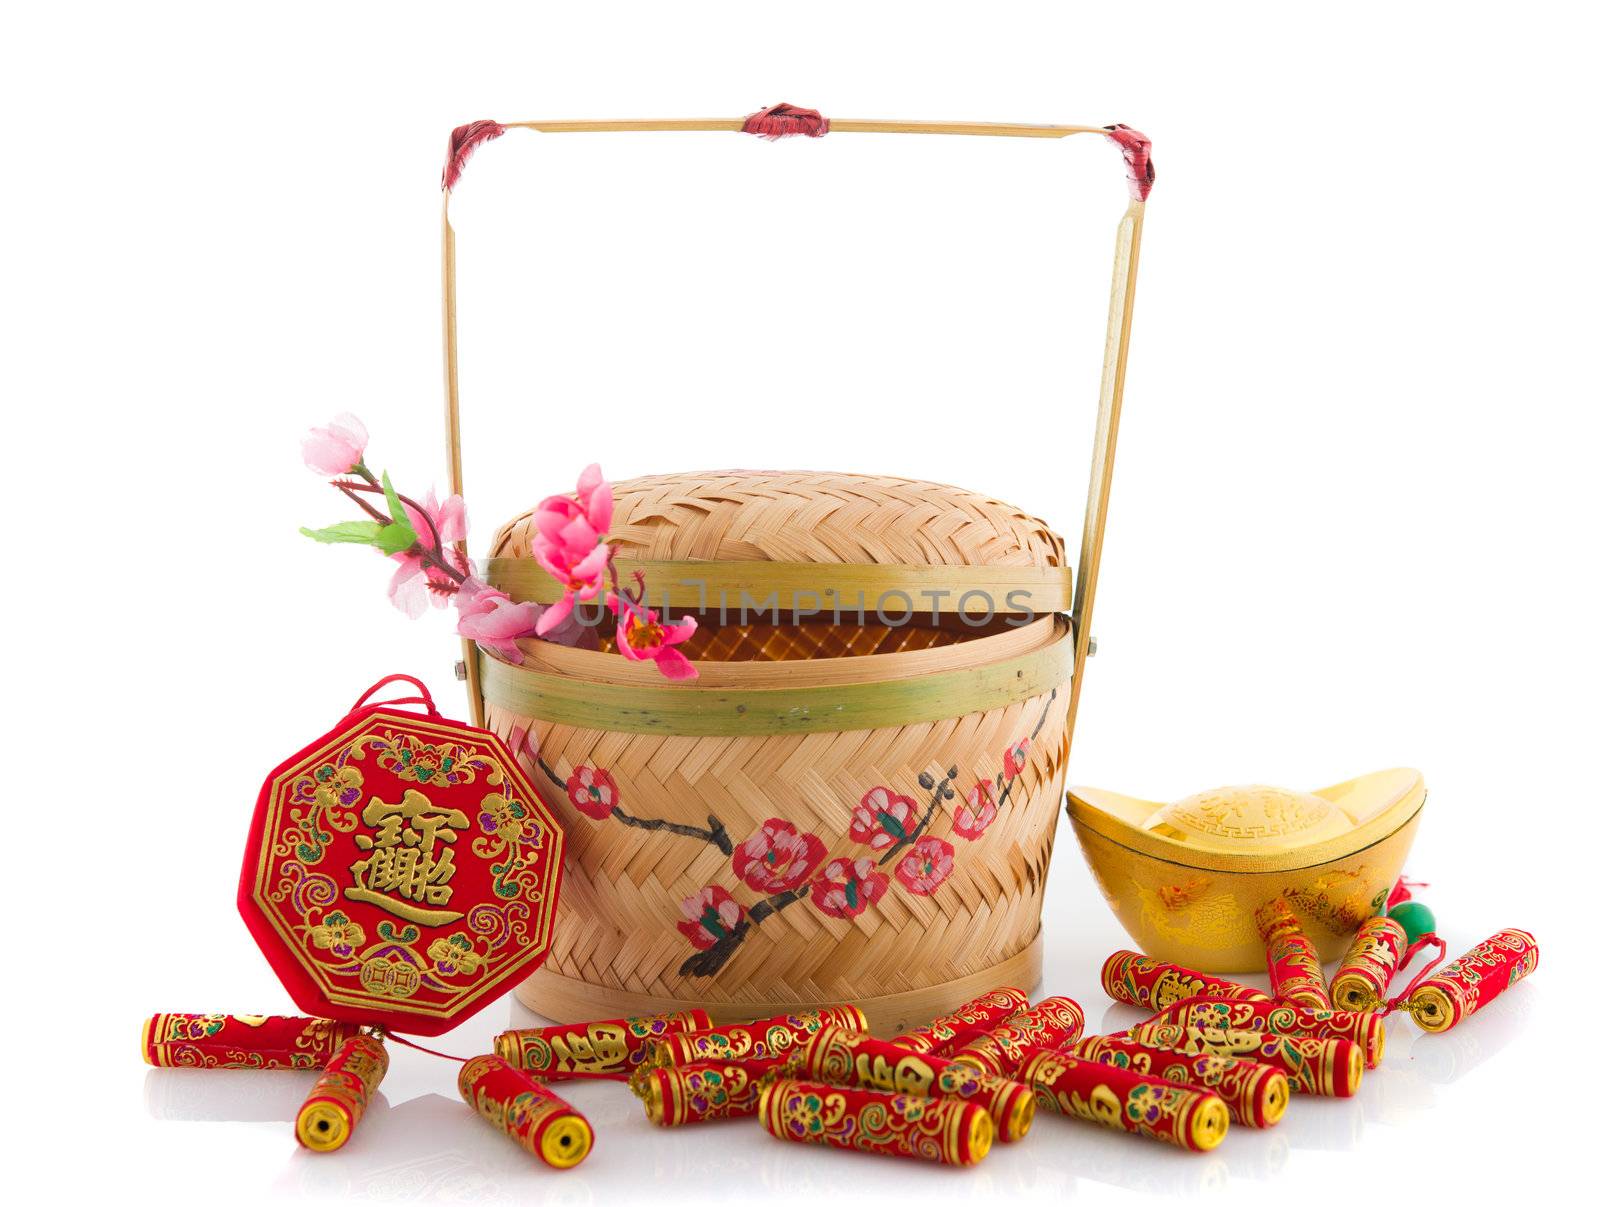 gong xi fa cai , traditional chinese new year items by yuliang11